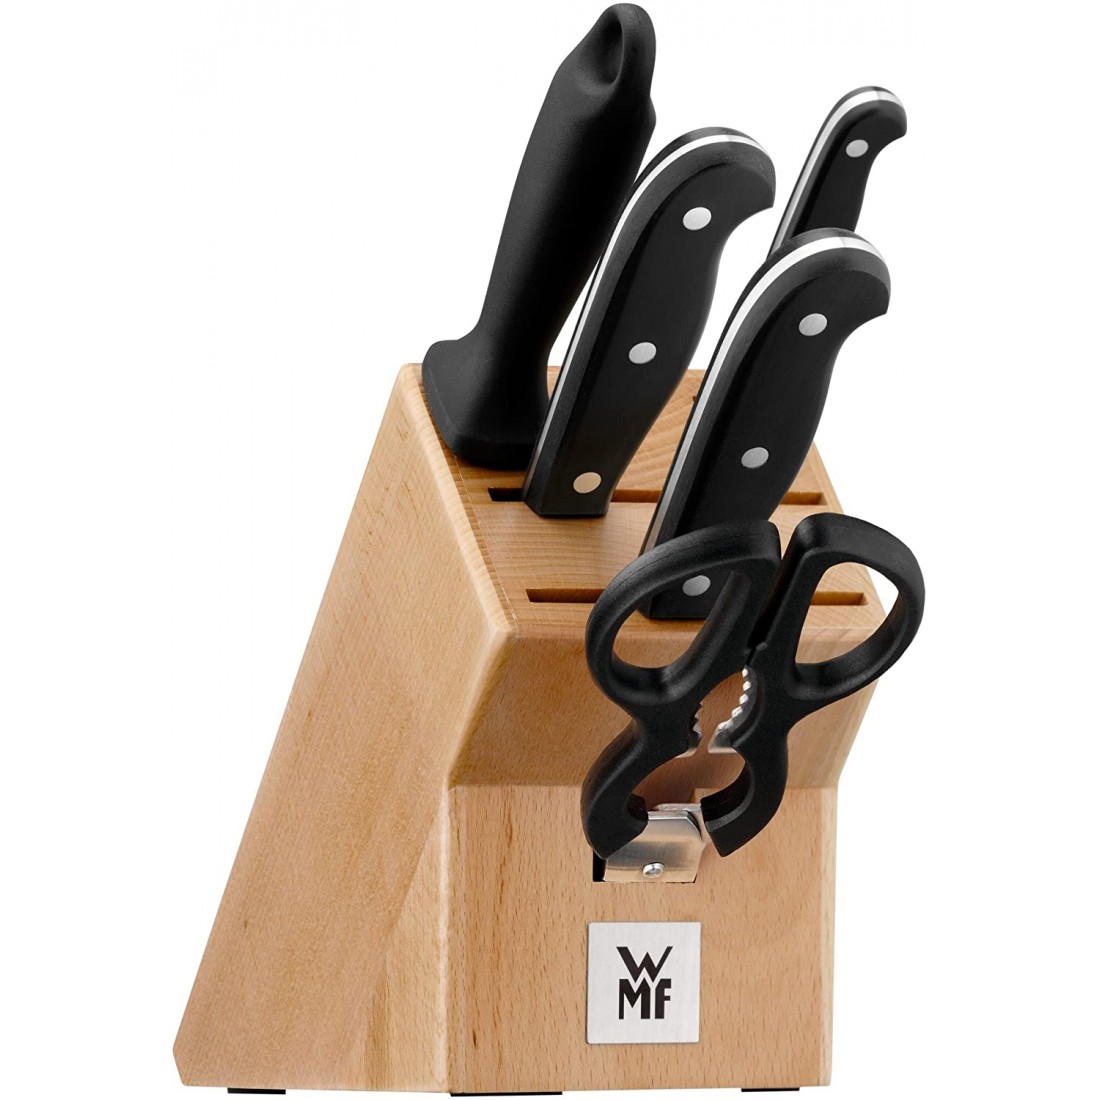 Installment 0% WMF spitzenklacse plus Asia 6 PCs knife set with chef knife